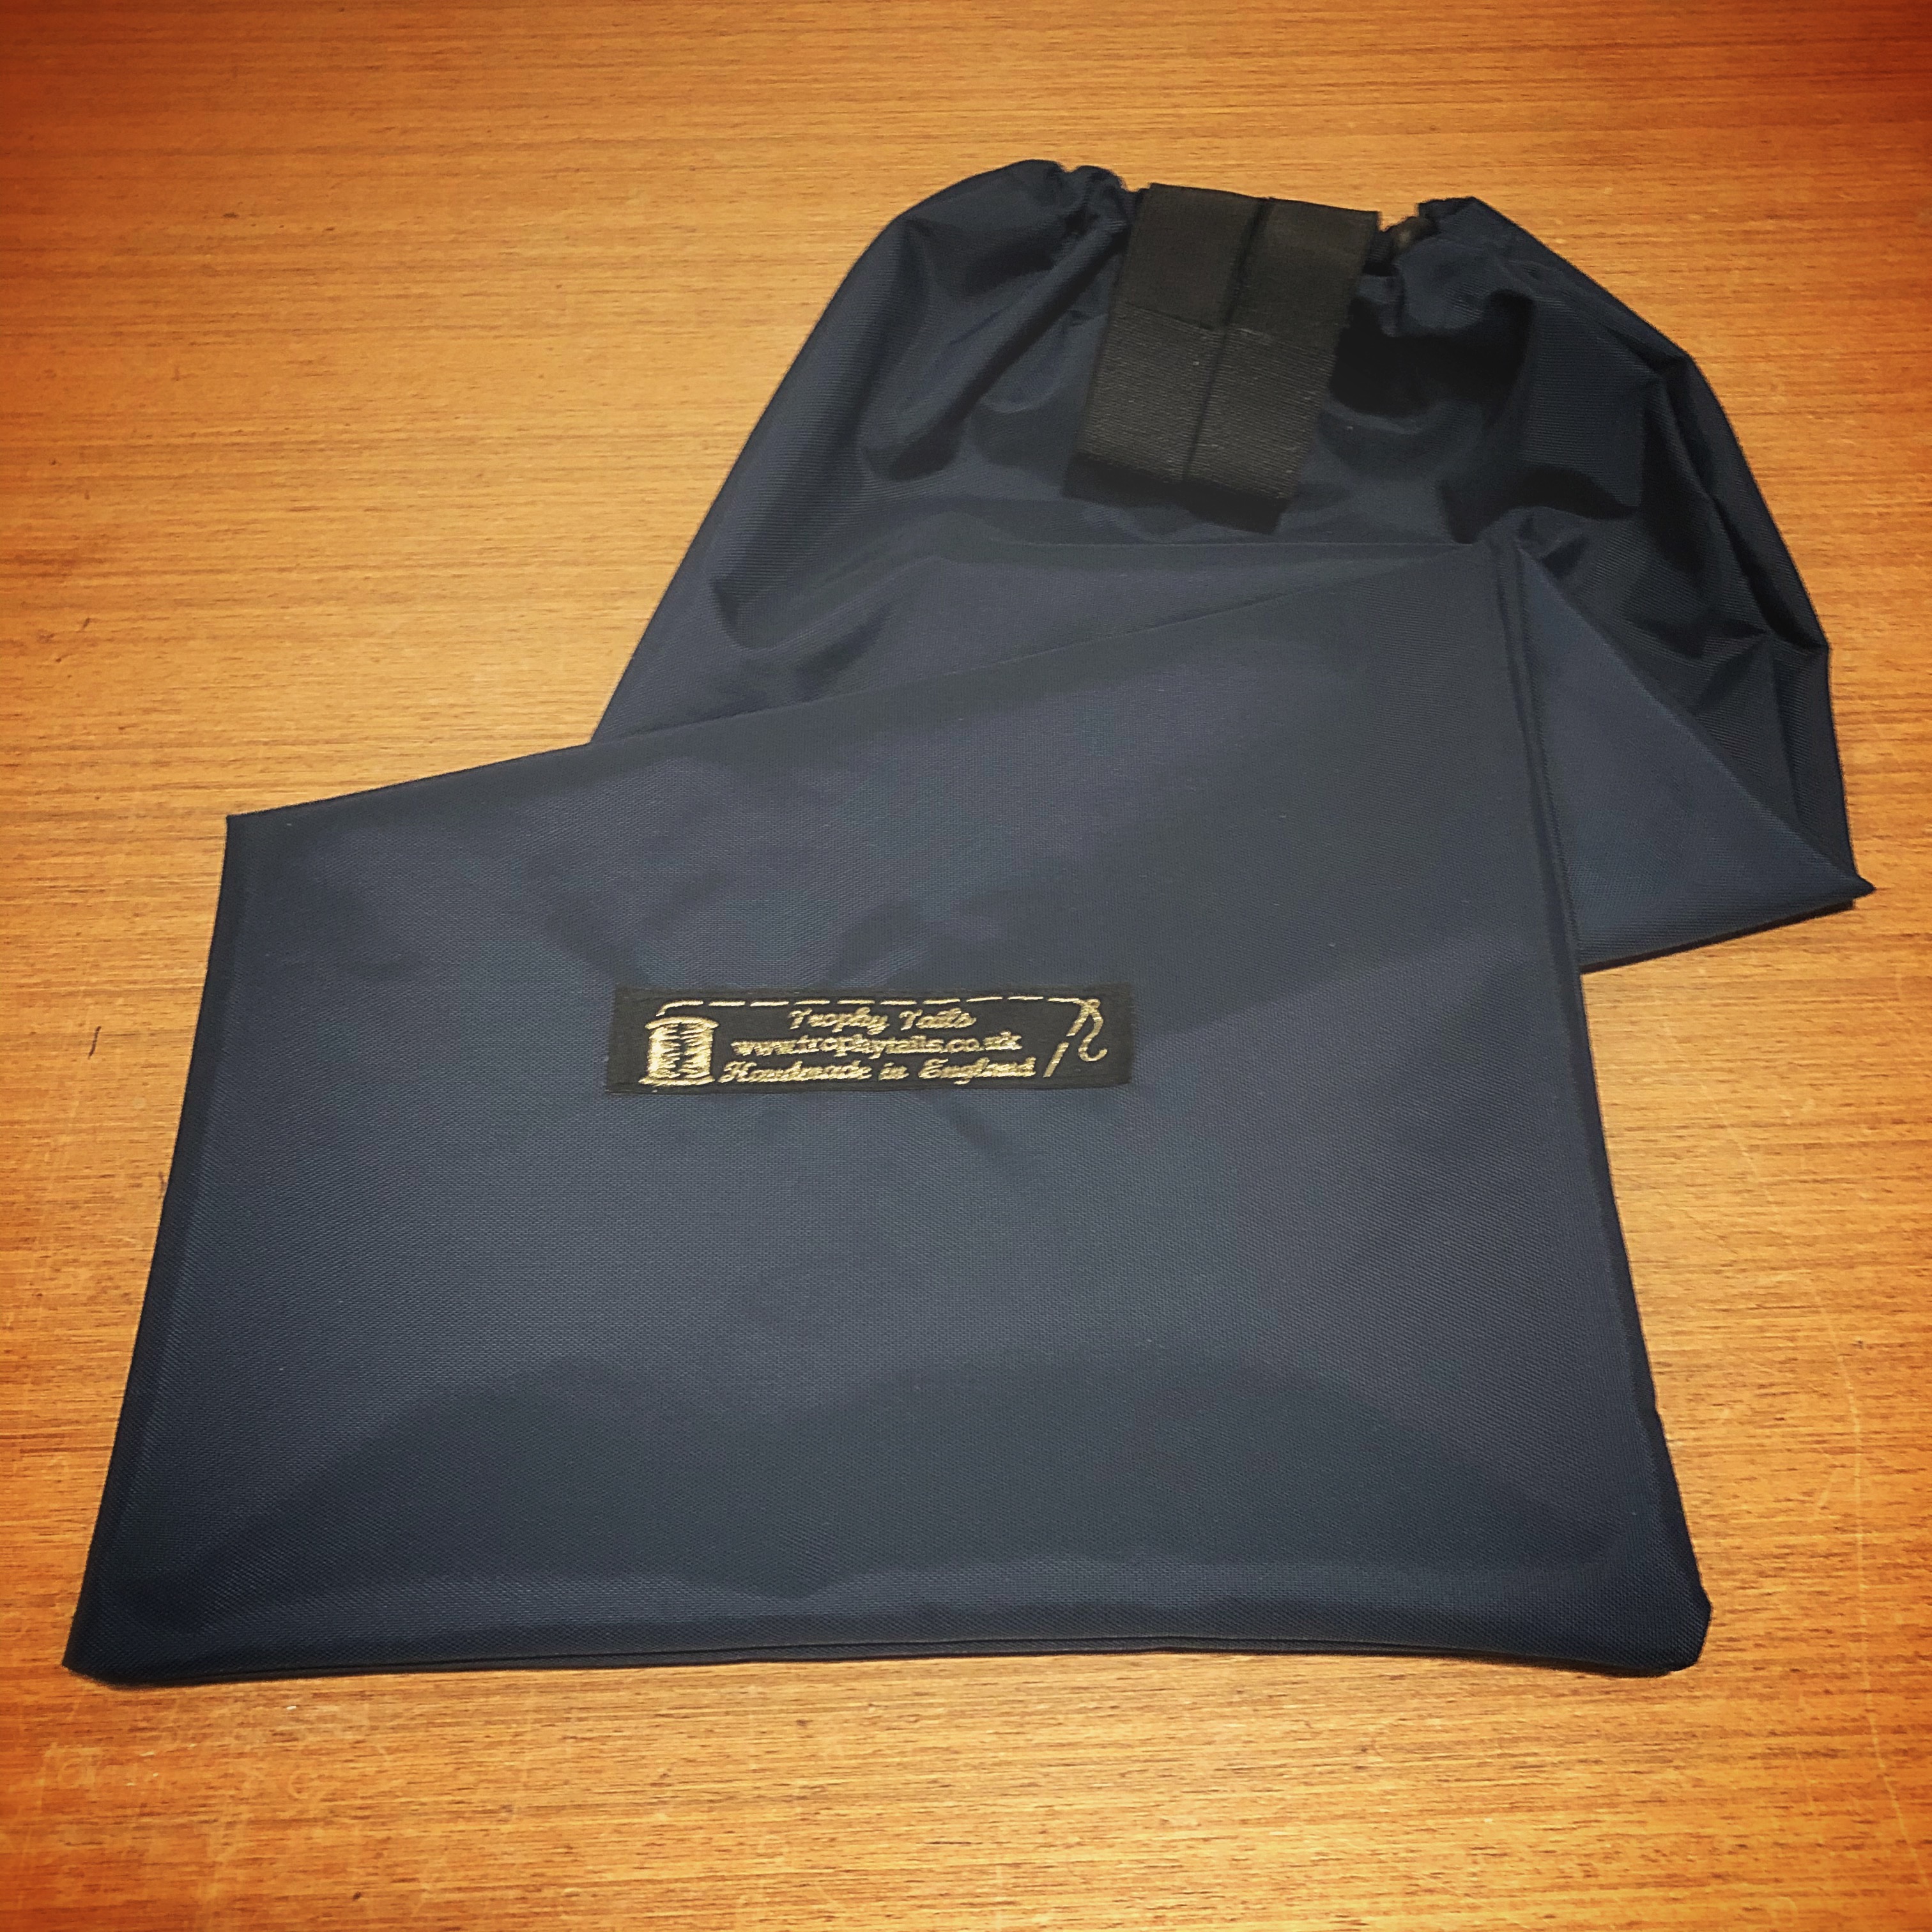 Ultimate cob tail bag - Navy